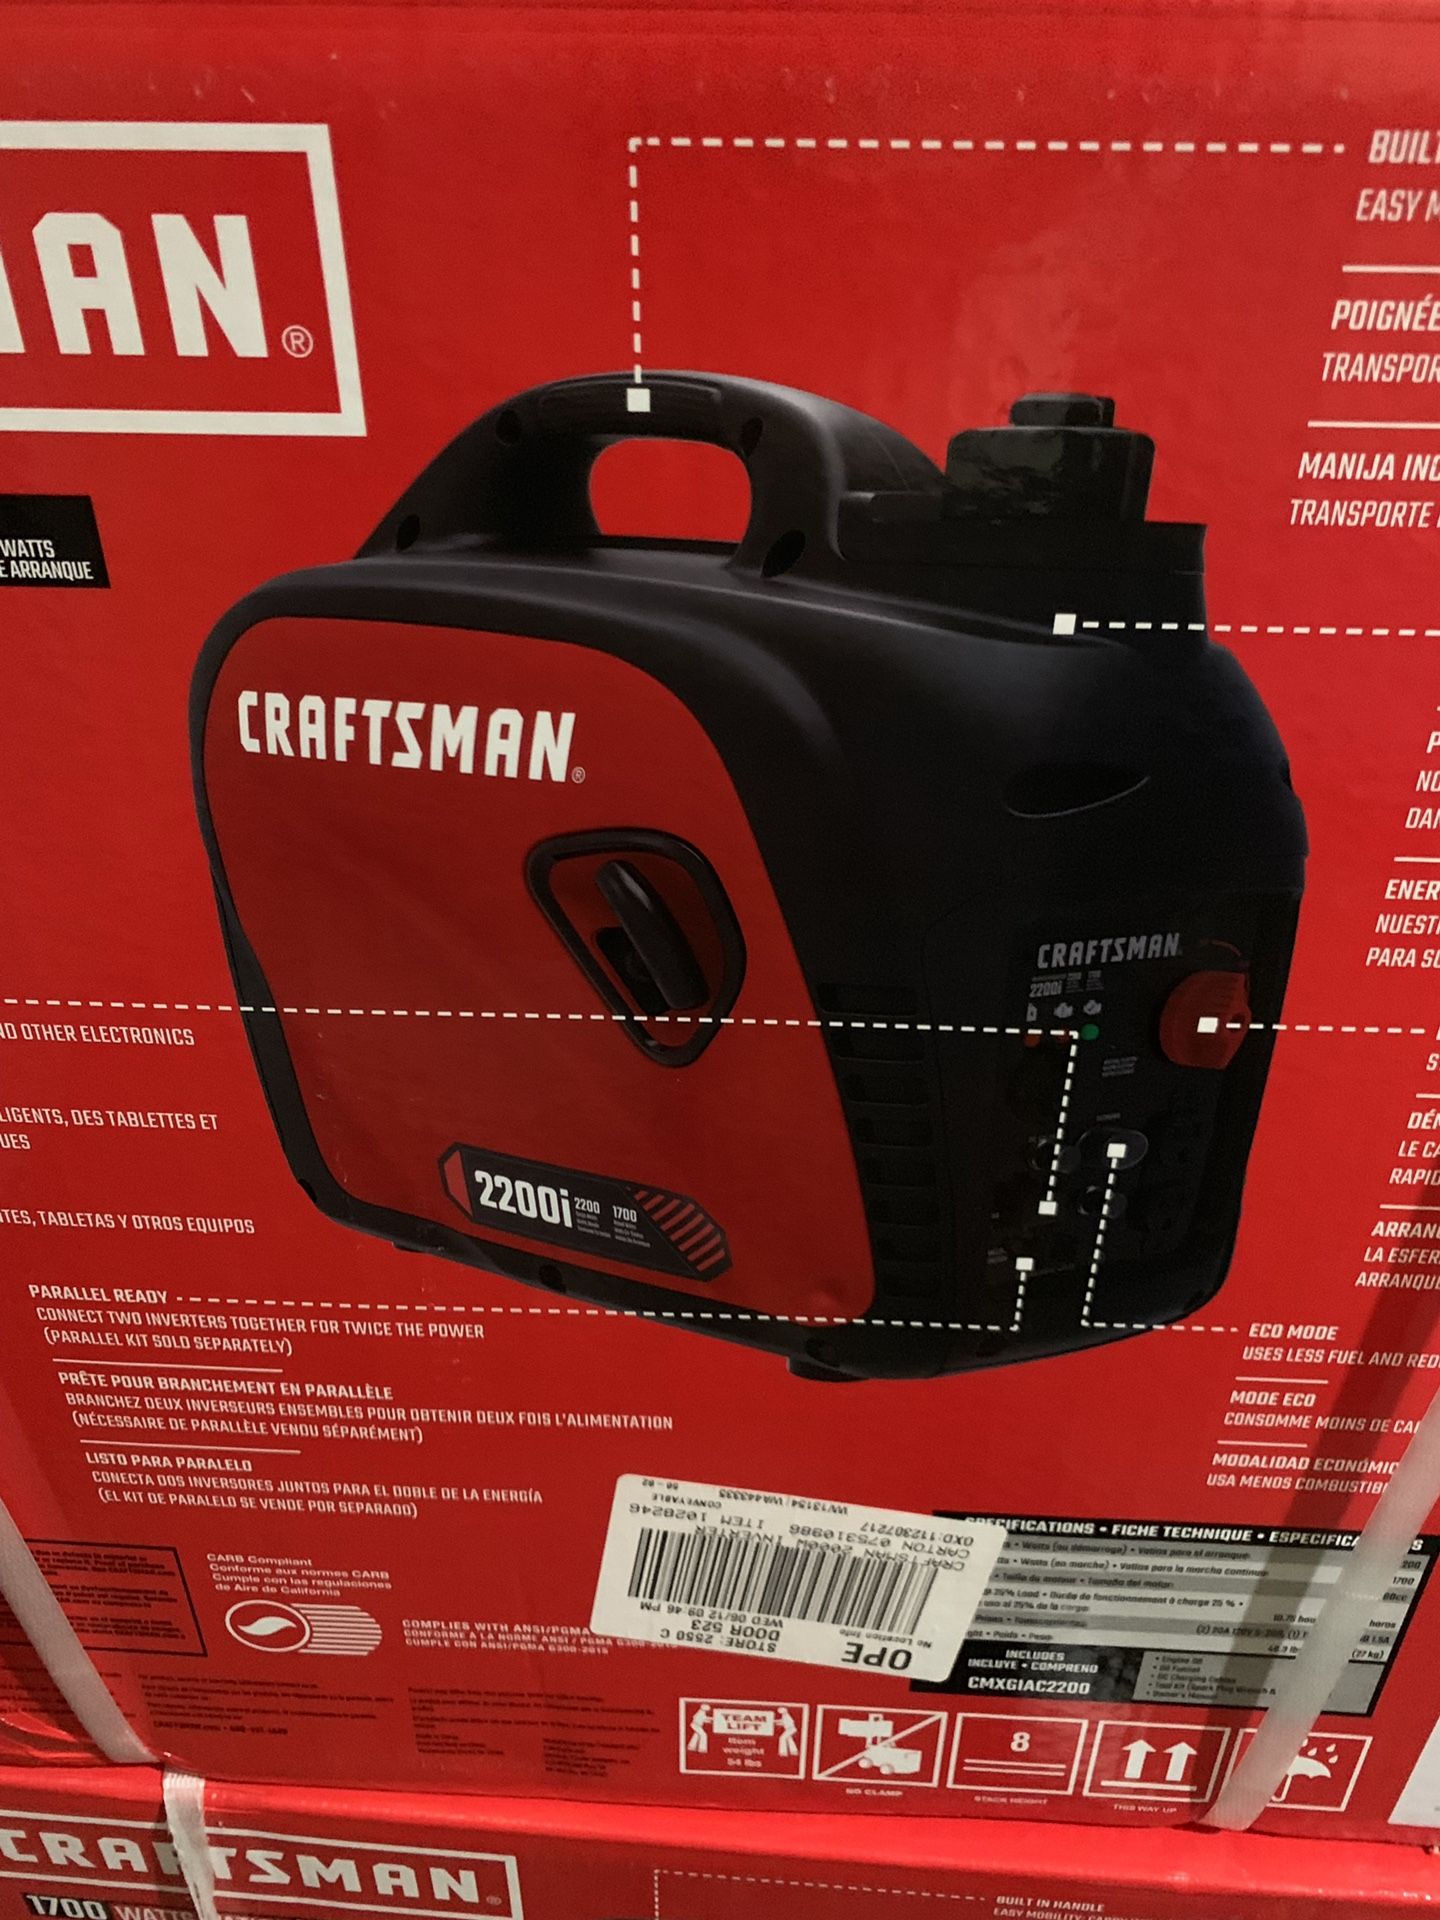 Craftsman generator retails $600